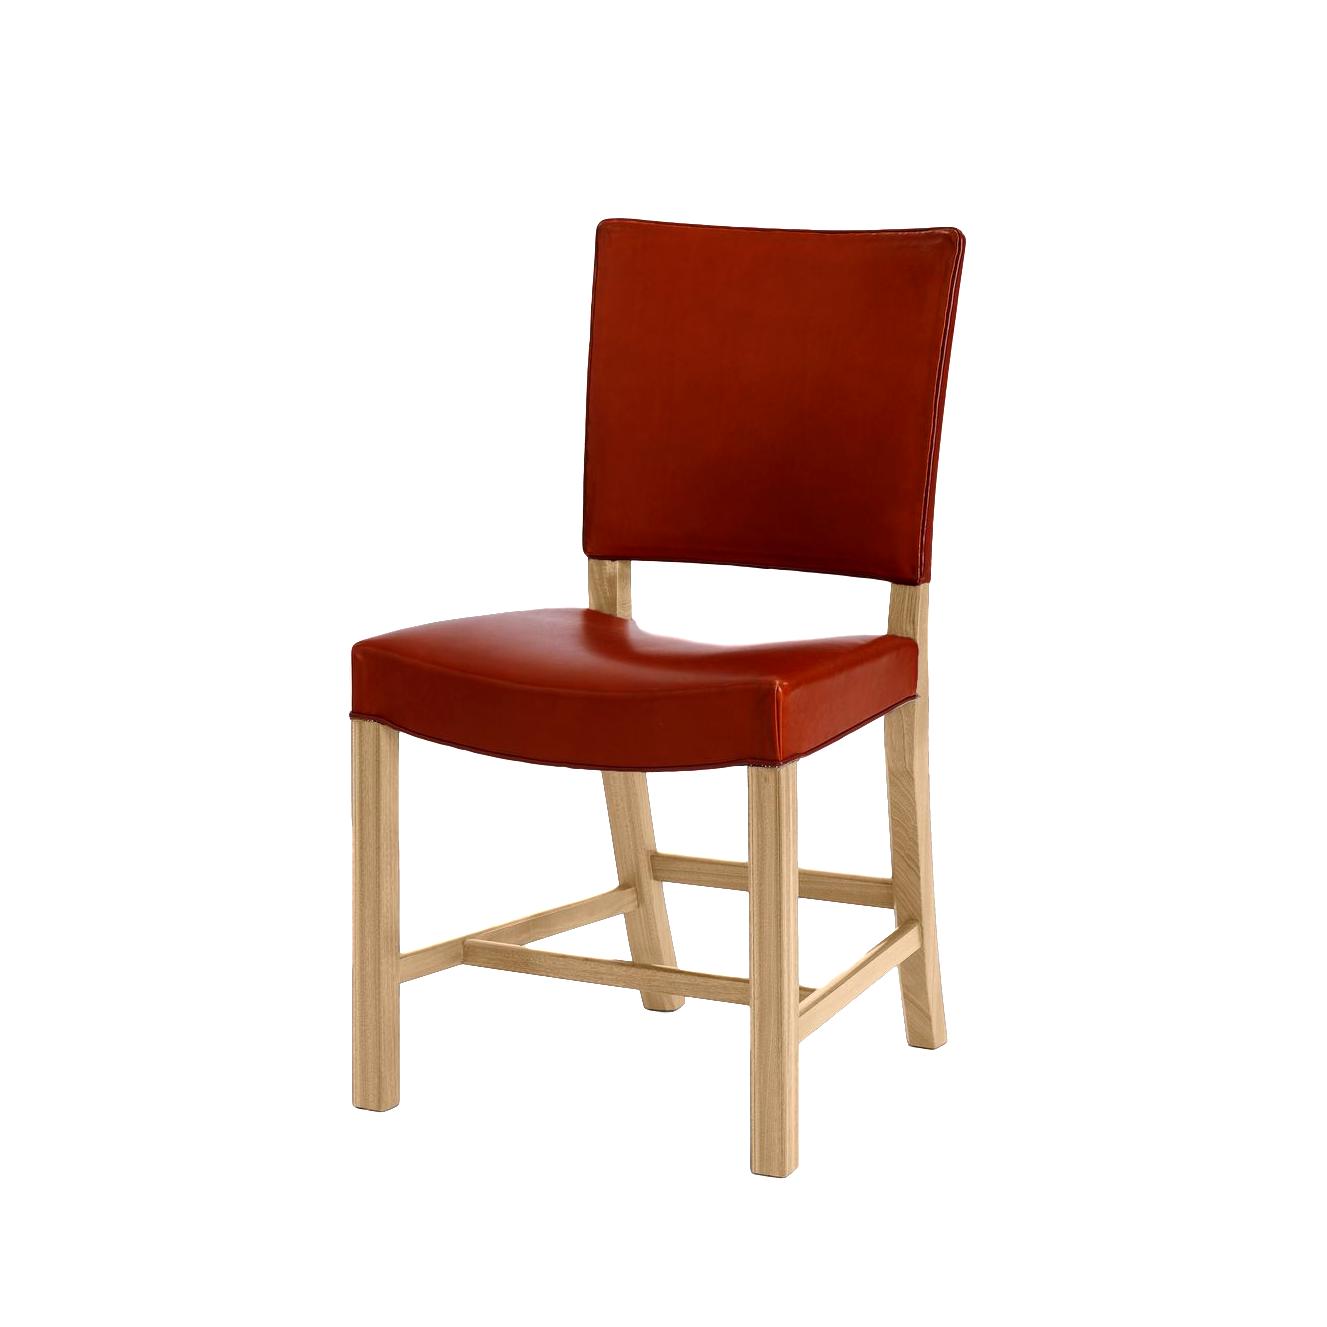 Carl Hansen KK39490 Pequeña silla roja, jabón de roble/cuero negro